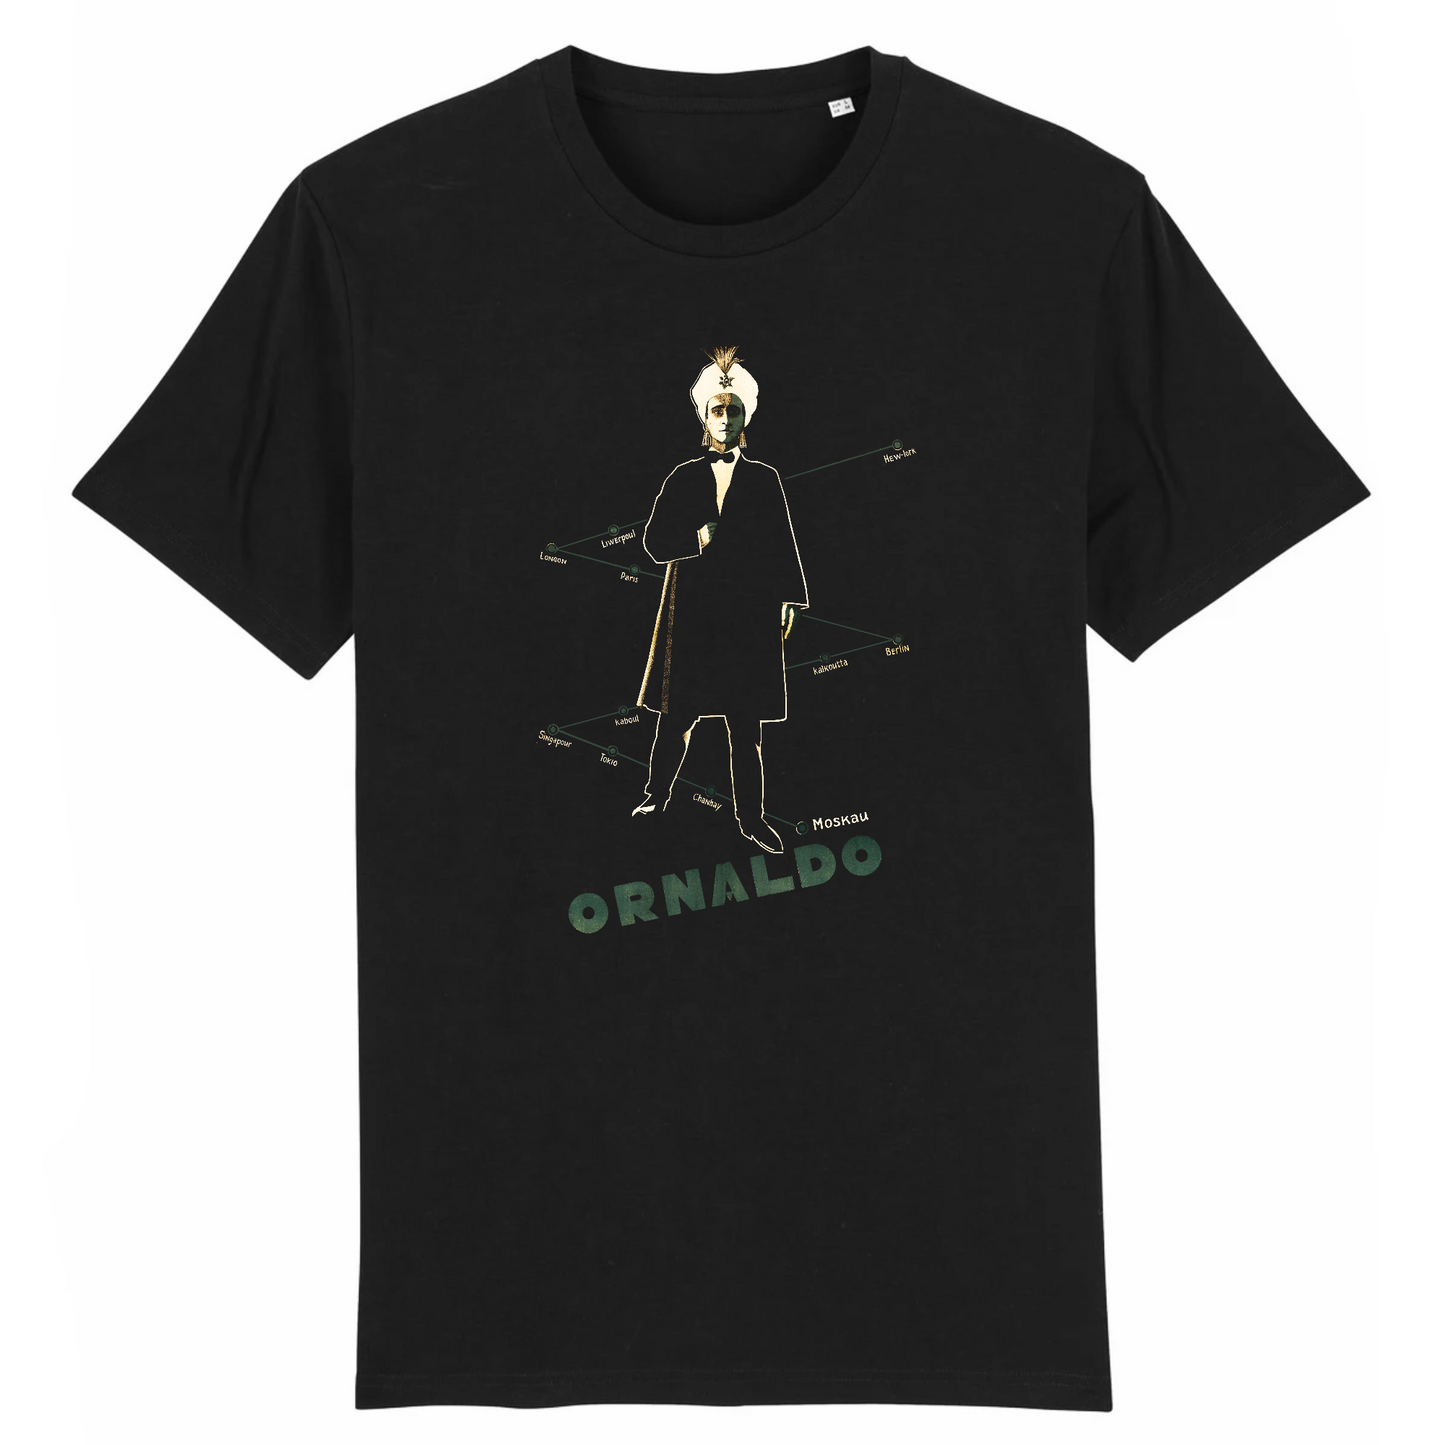 Ornaldo the Great, 1930w - Organic Cotton T-shirt